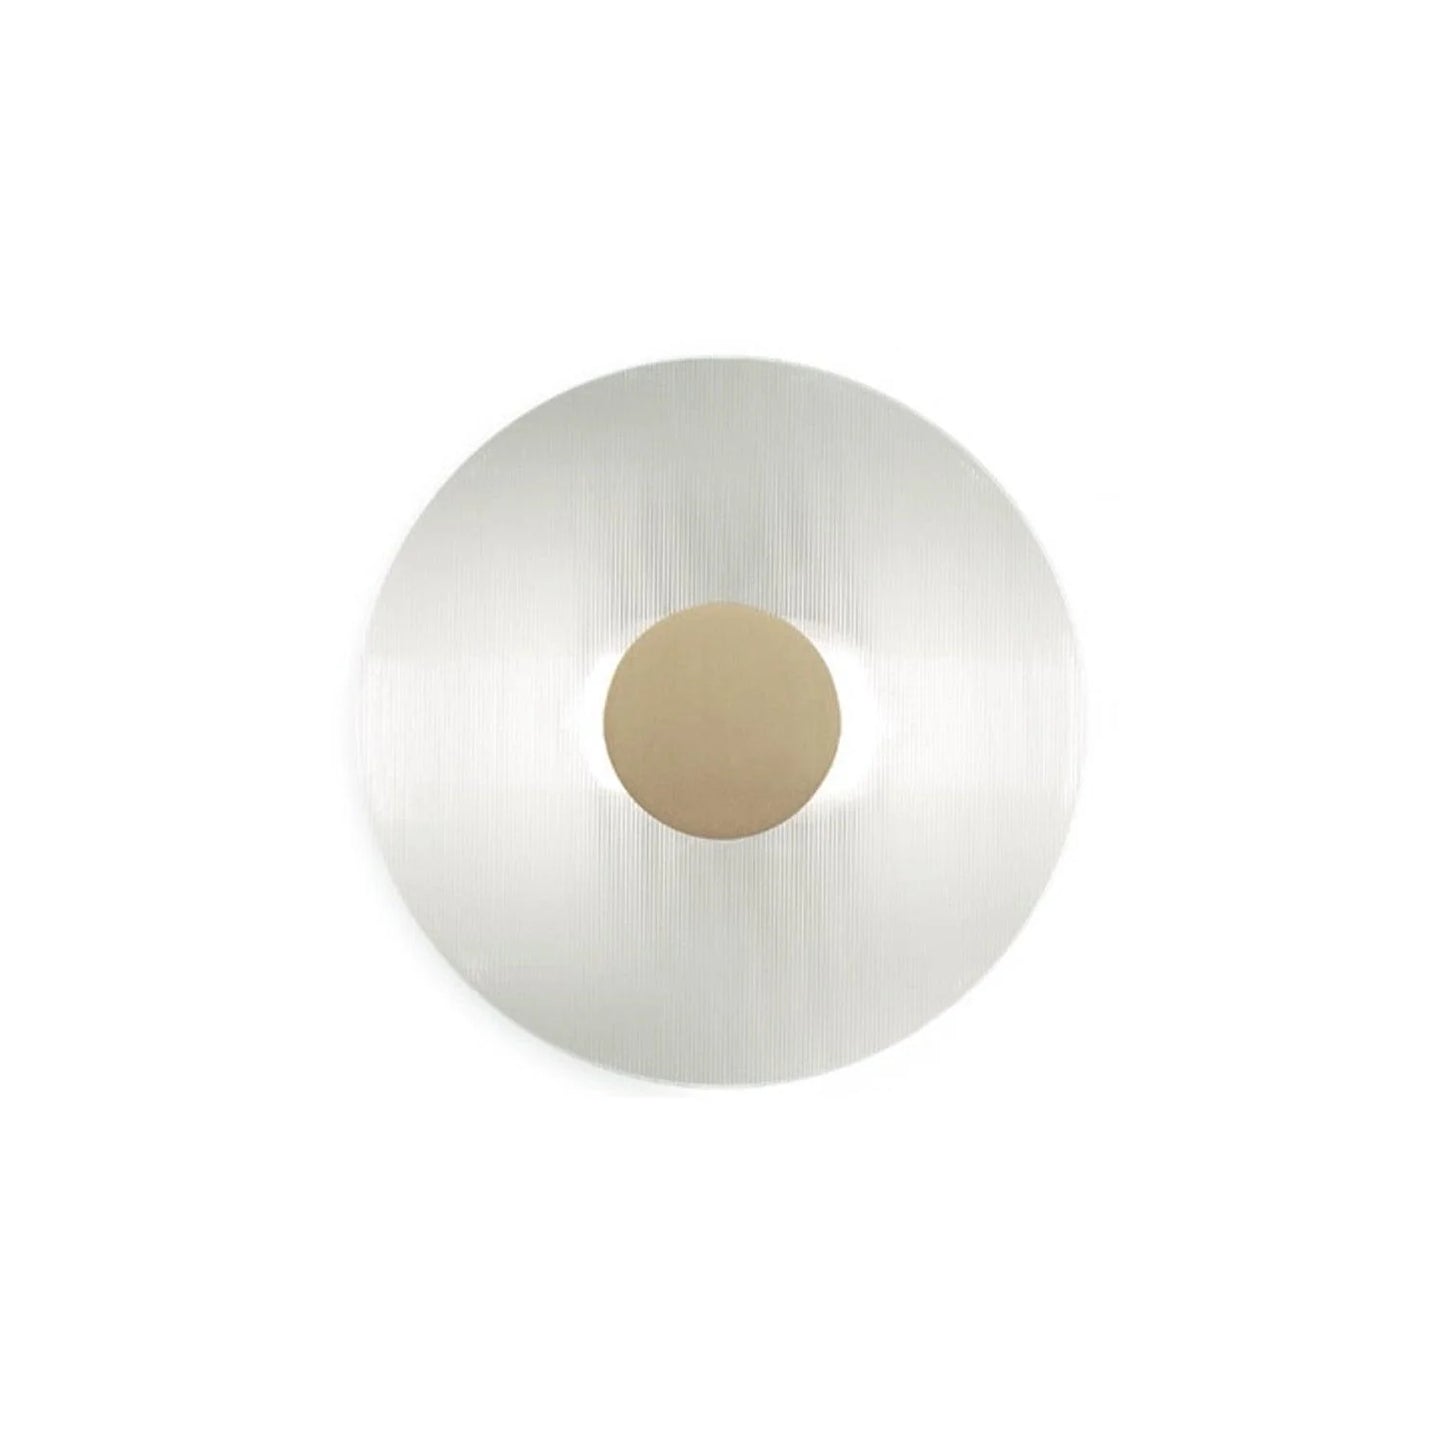 Glass Button Wall Lamp